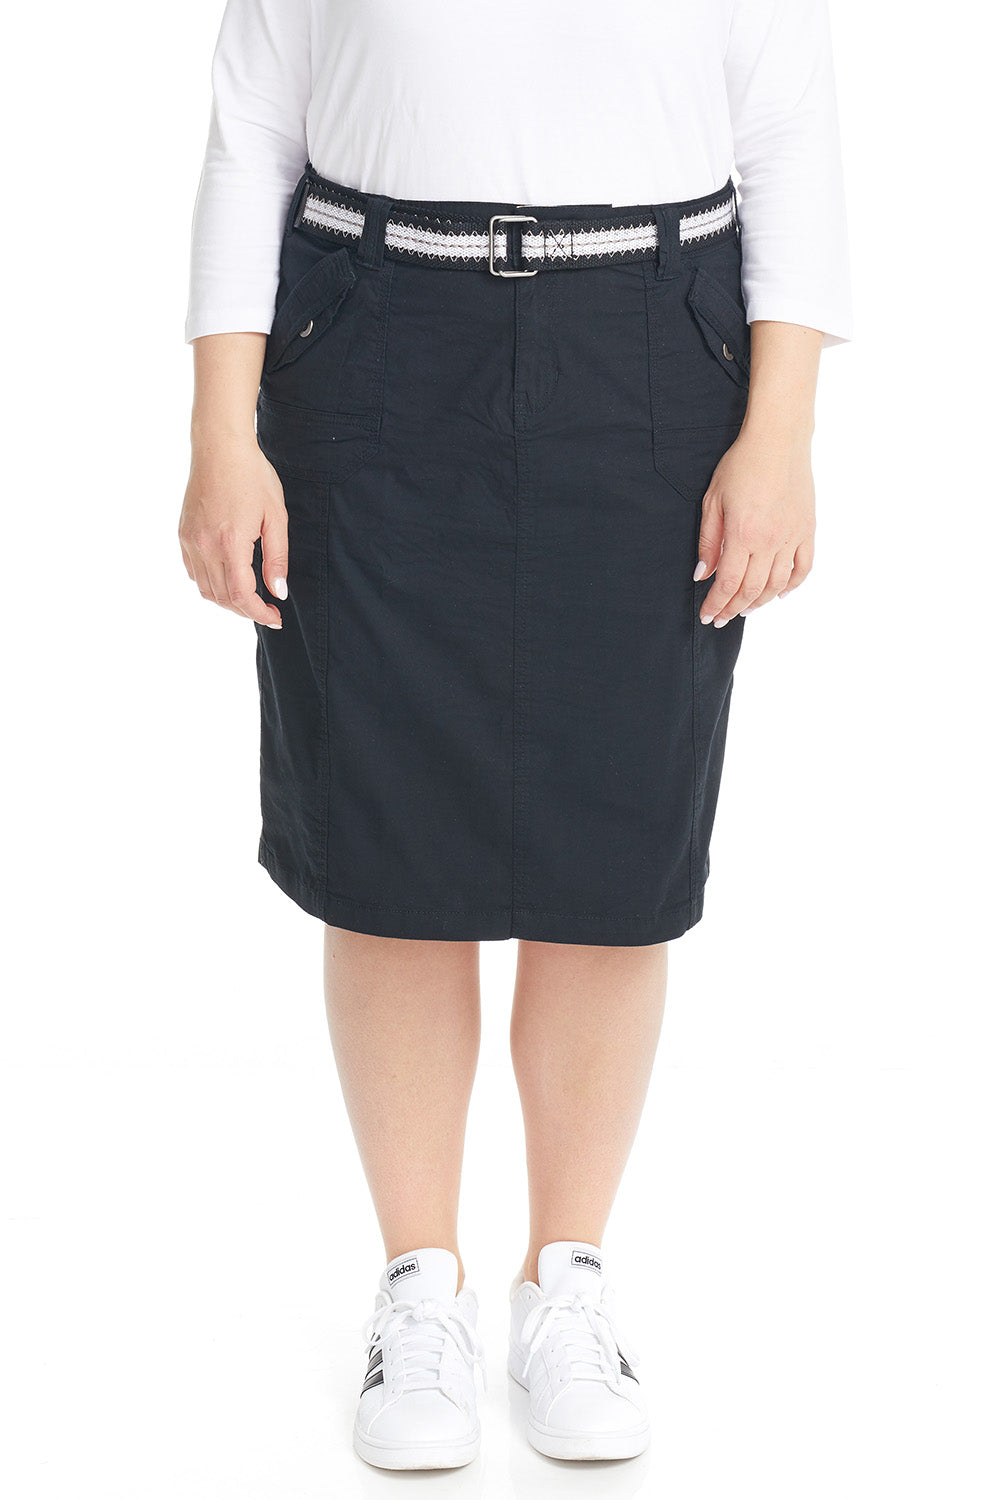 Esteez VIRGINIA Skirt - Stretch Poplin Cargo Knee Length Pencil Skirt for Women